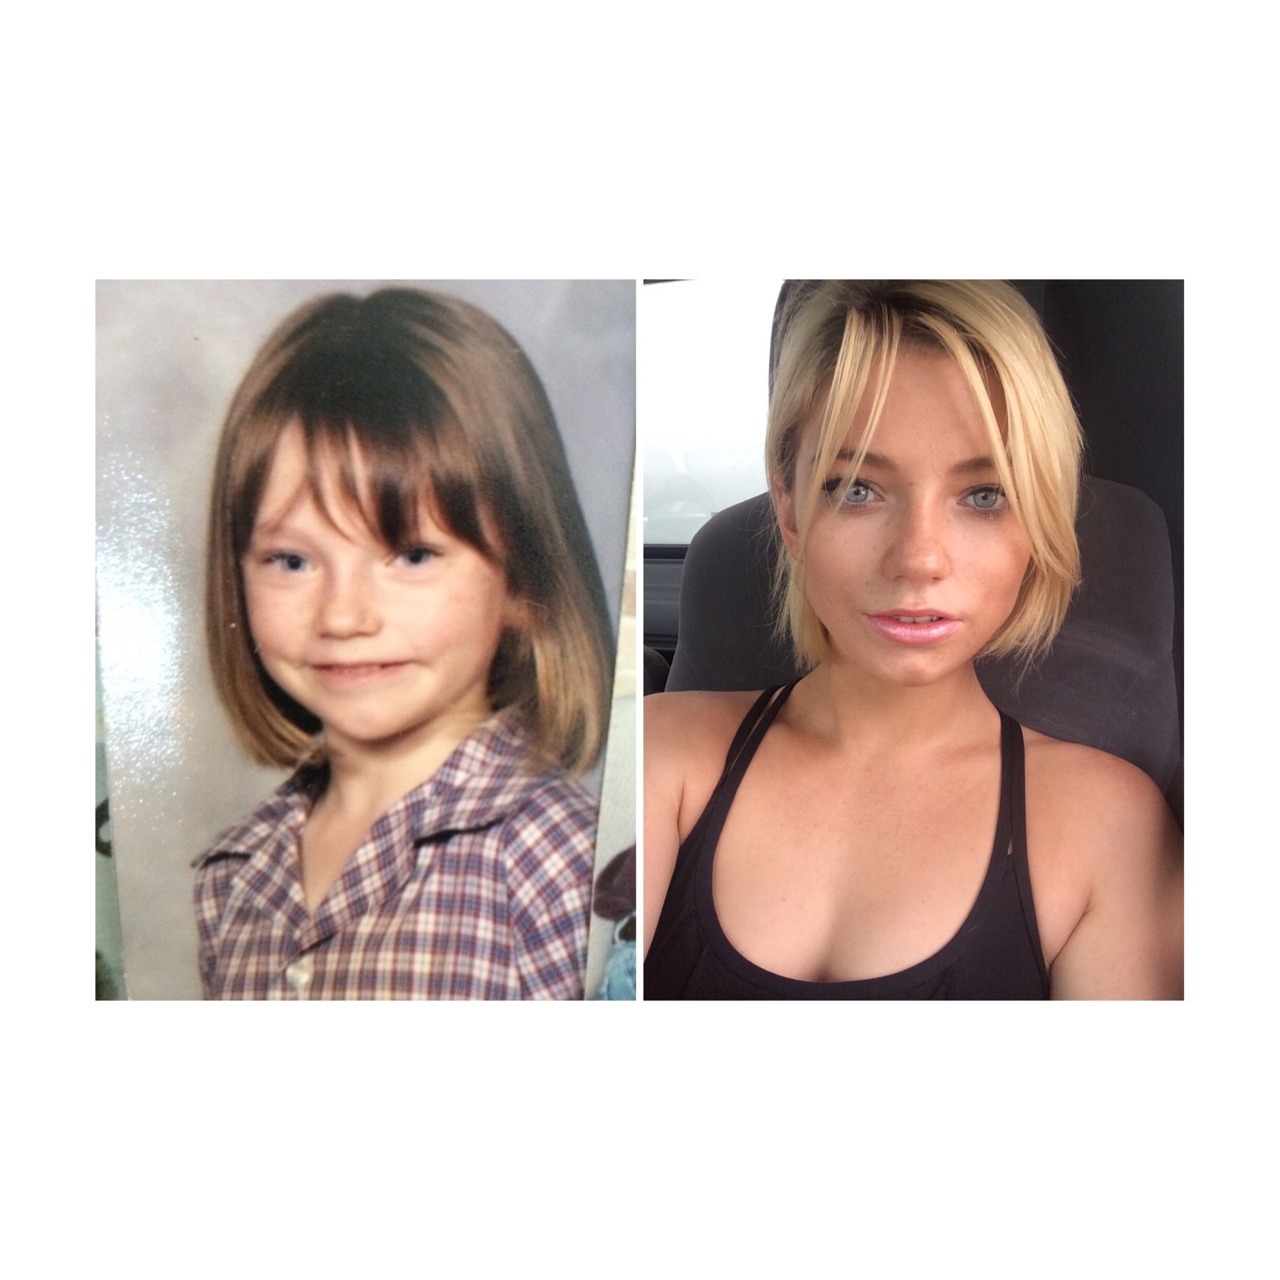 le-seul:Puberty hit me like a mother fucking truck hahaha 😂😂 I still look like